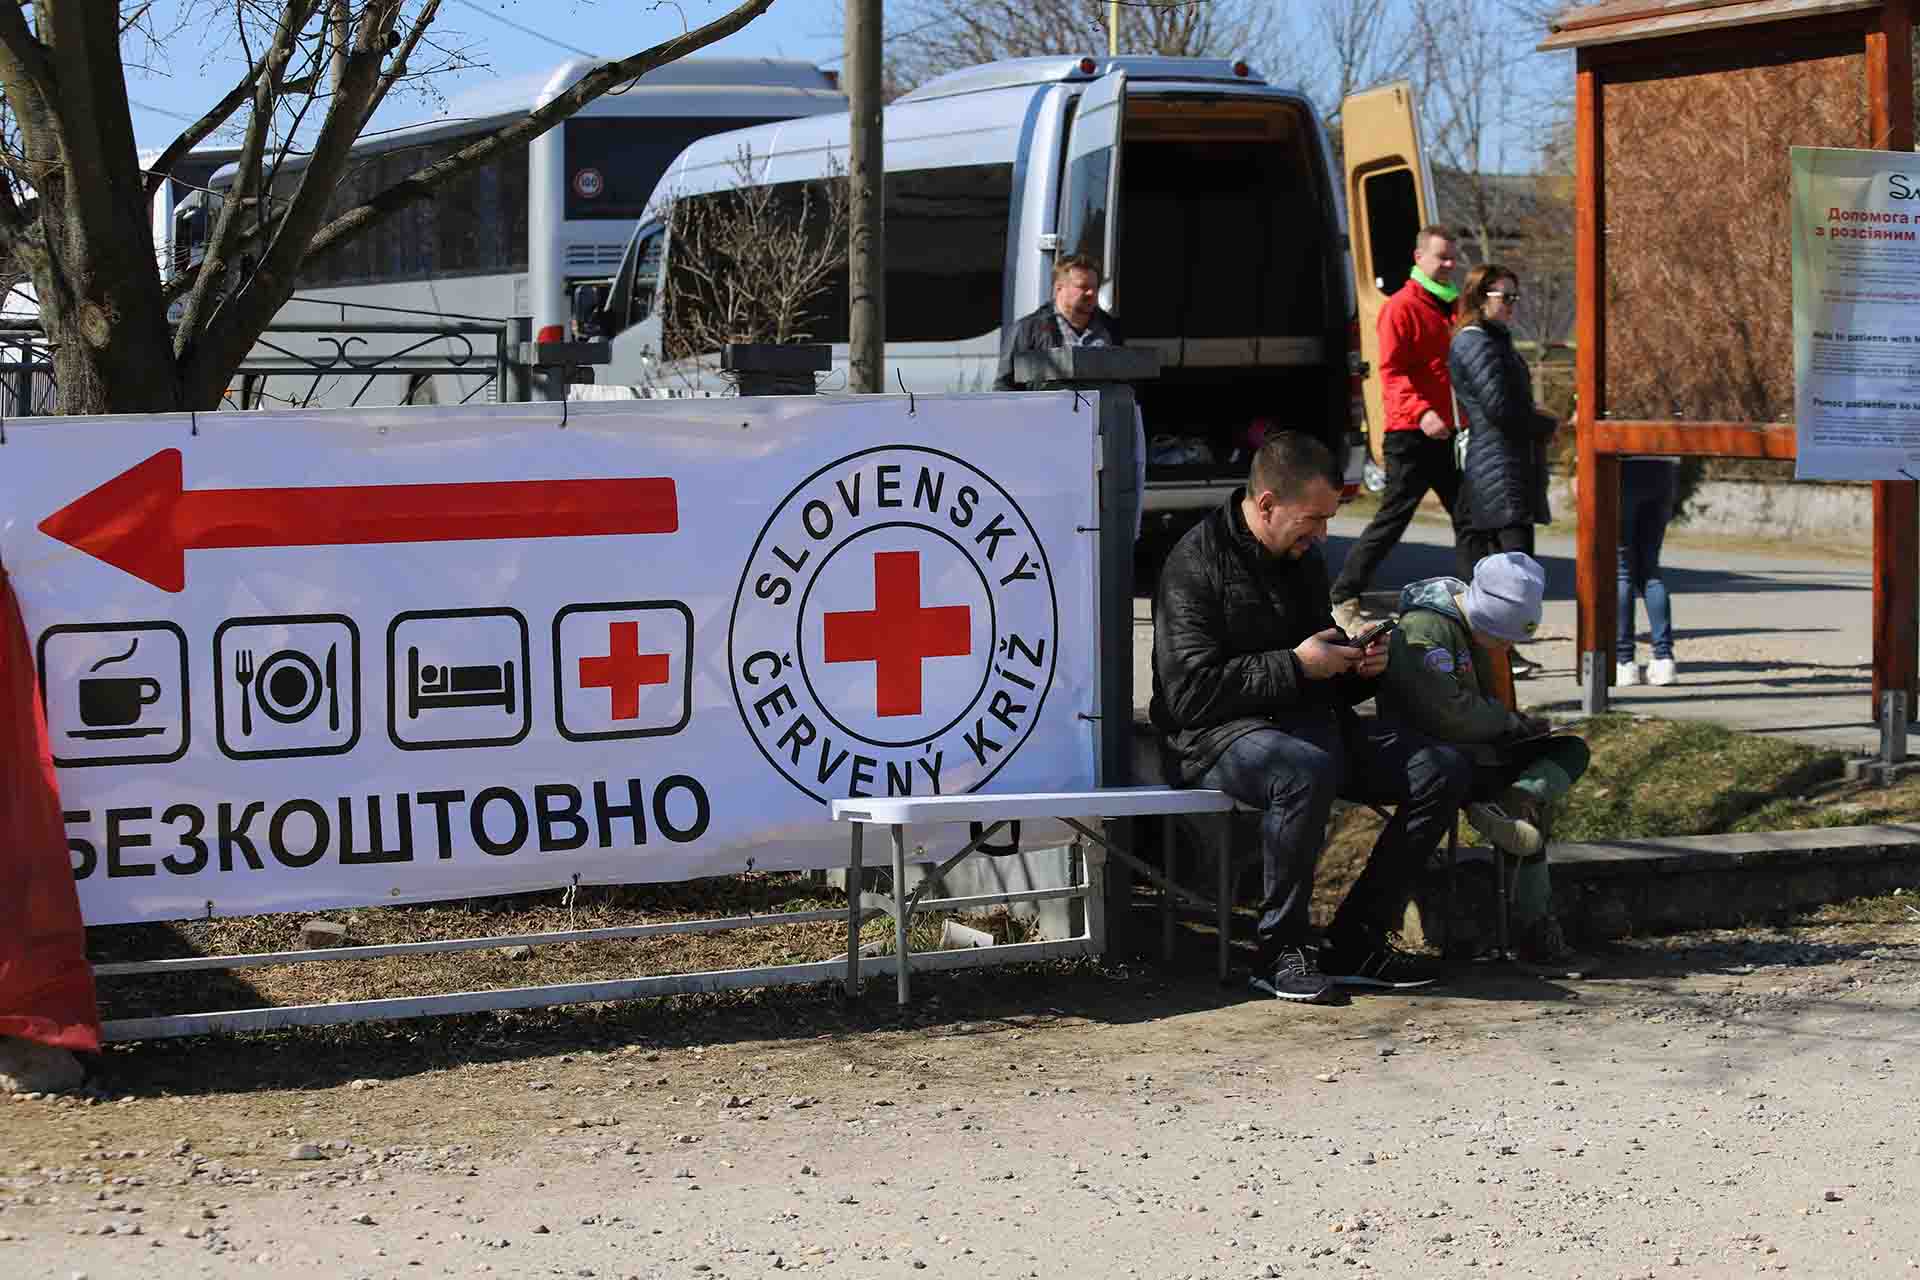 Dos refugiados, padre e hijo, junto al campamento de refugiados de la Cruz Roja en Vel’ke Slemence en Eslovaquia / Foto: FFM - EA